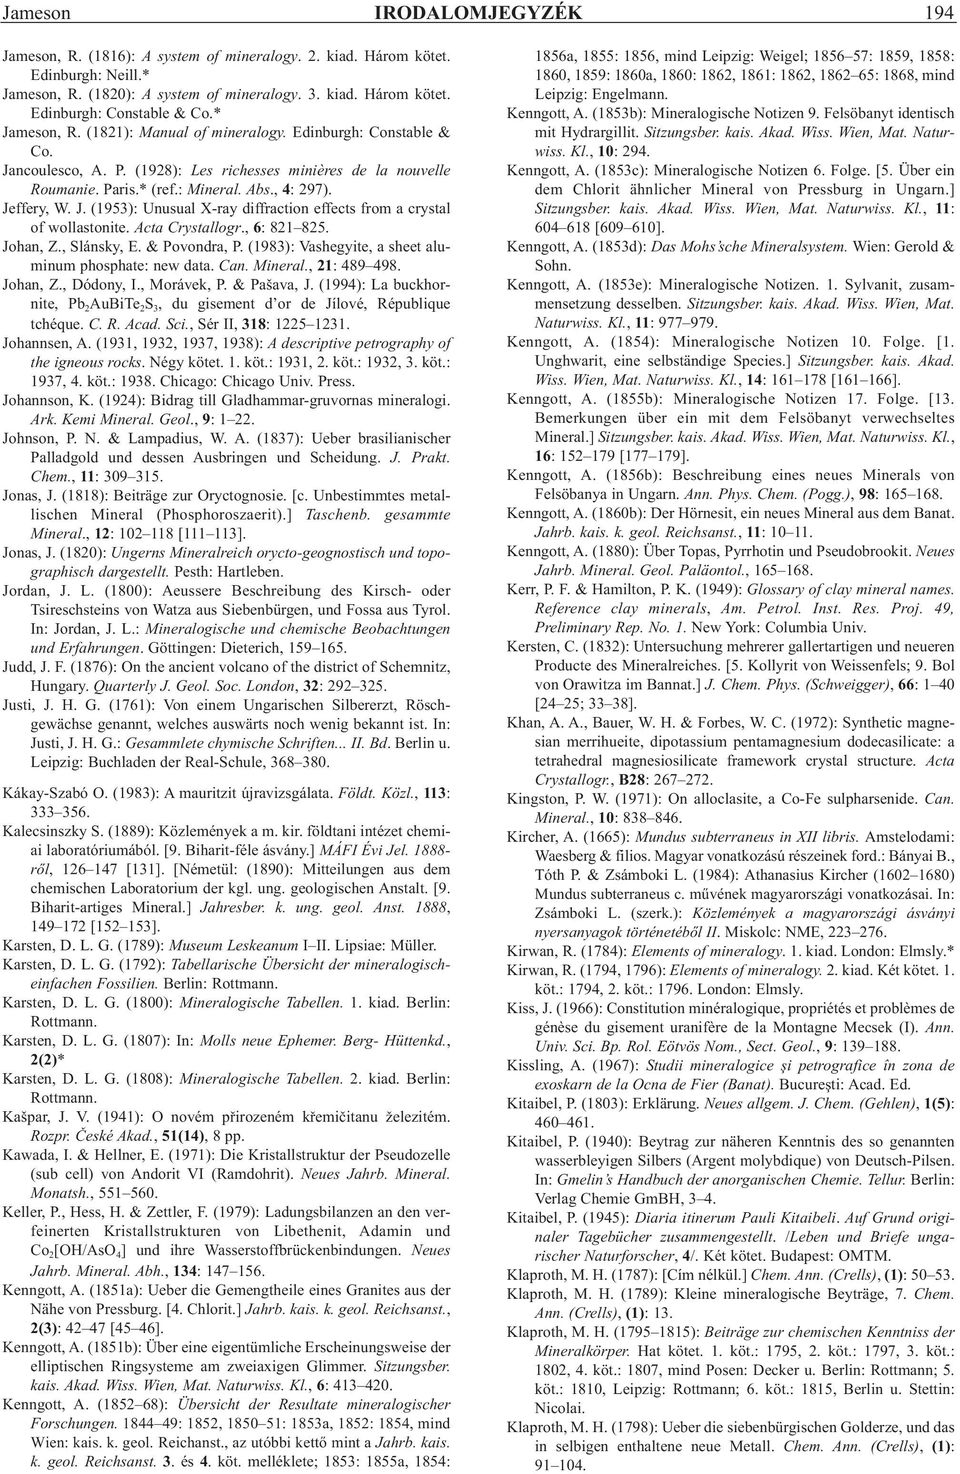 Acta Crystallogr., 6: 821 825. Johan, Z., Slánsky, E. & Povondra, P. (1983): Vashegyite, a sheet aluminum phosphate: new data. Can. Mineral., 21: 489 498. Johan, Z., Dódony, I., Morávek, P.